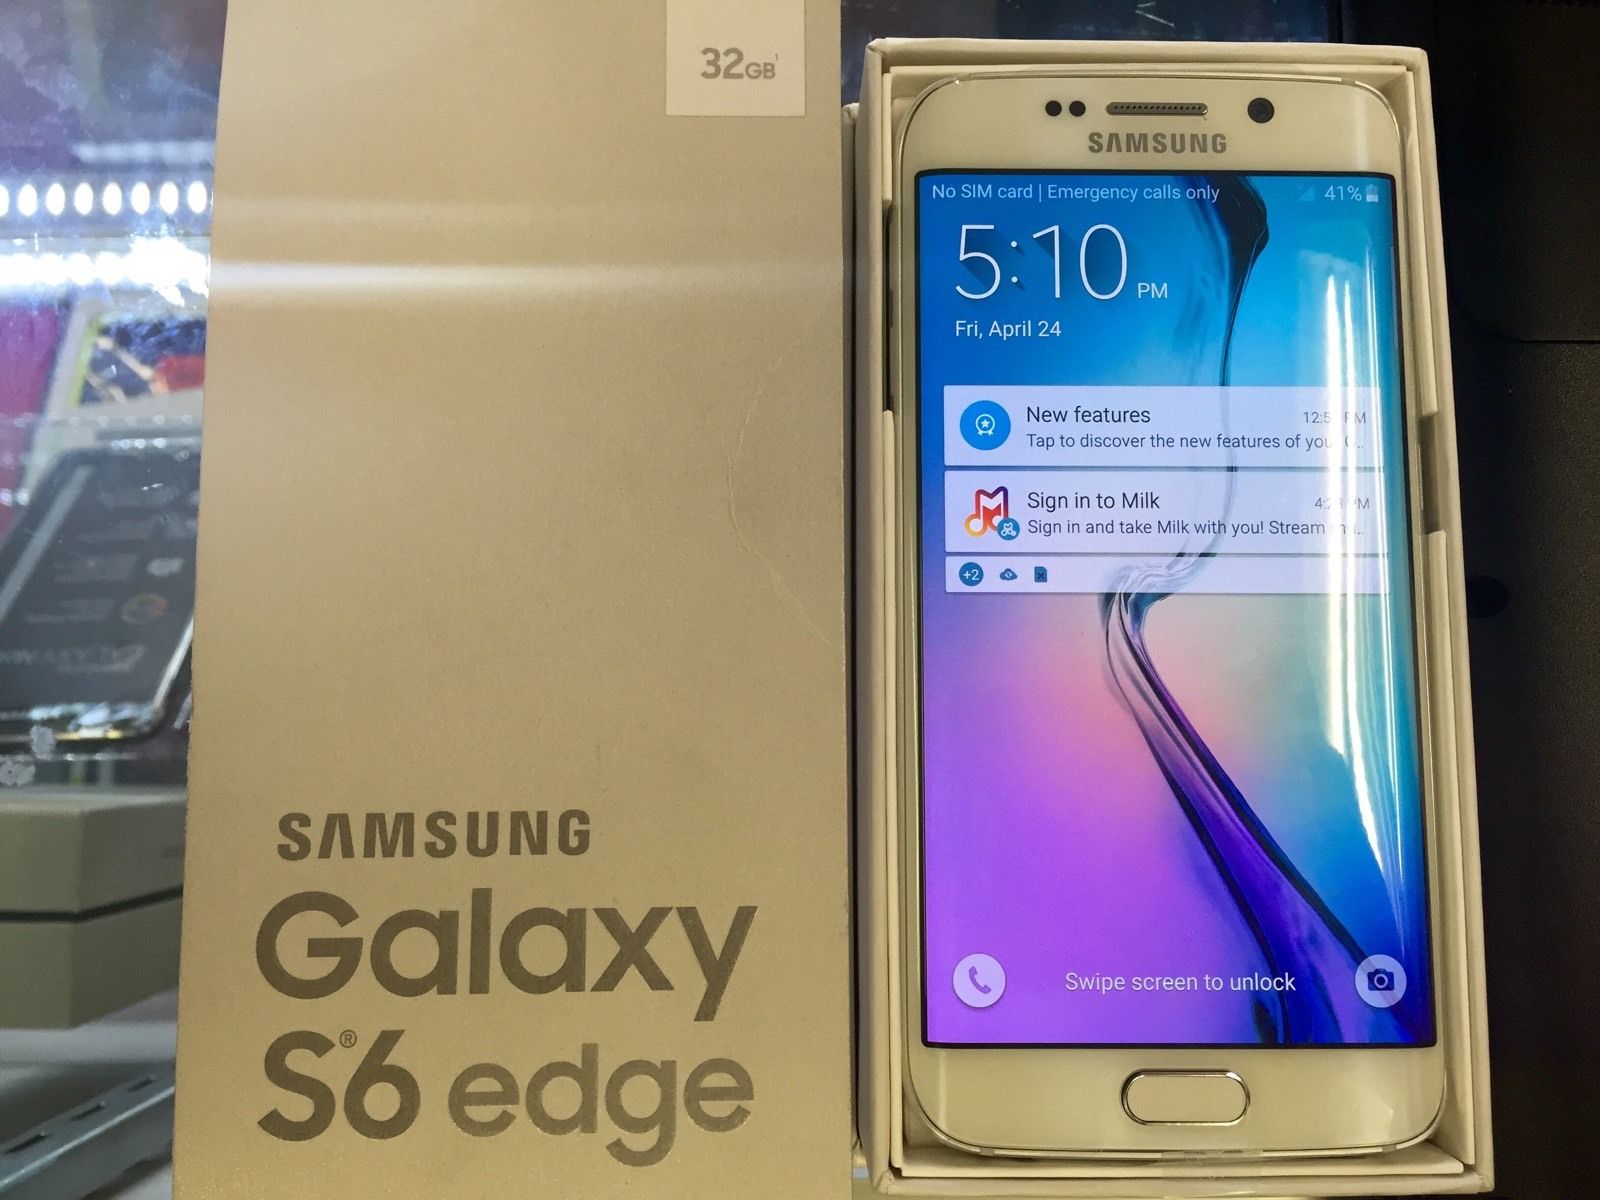 Samsung Galaxy S6 Edge Mobile Phone